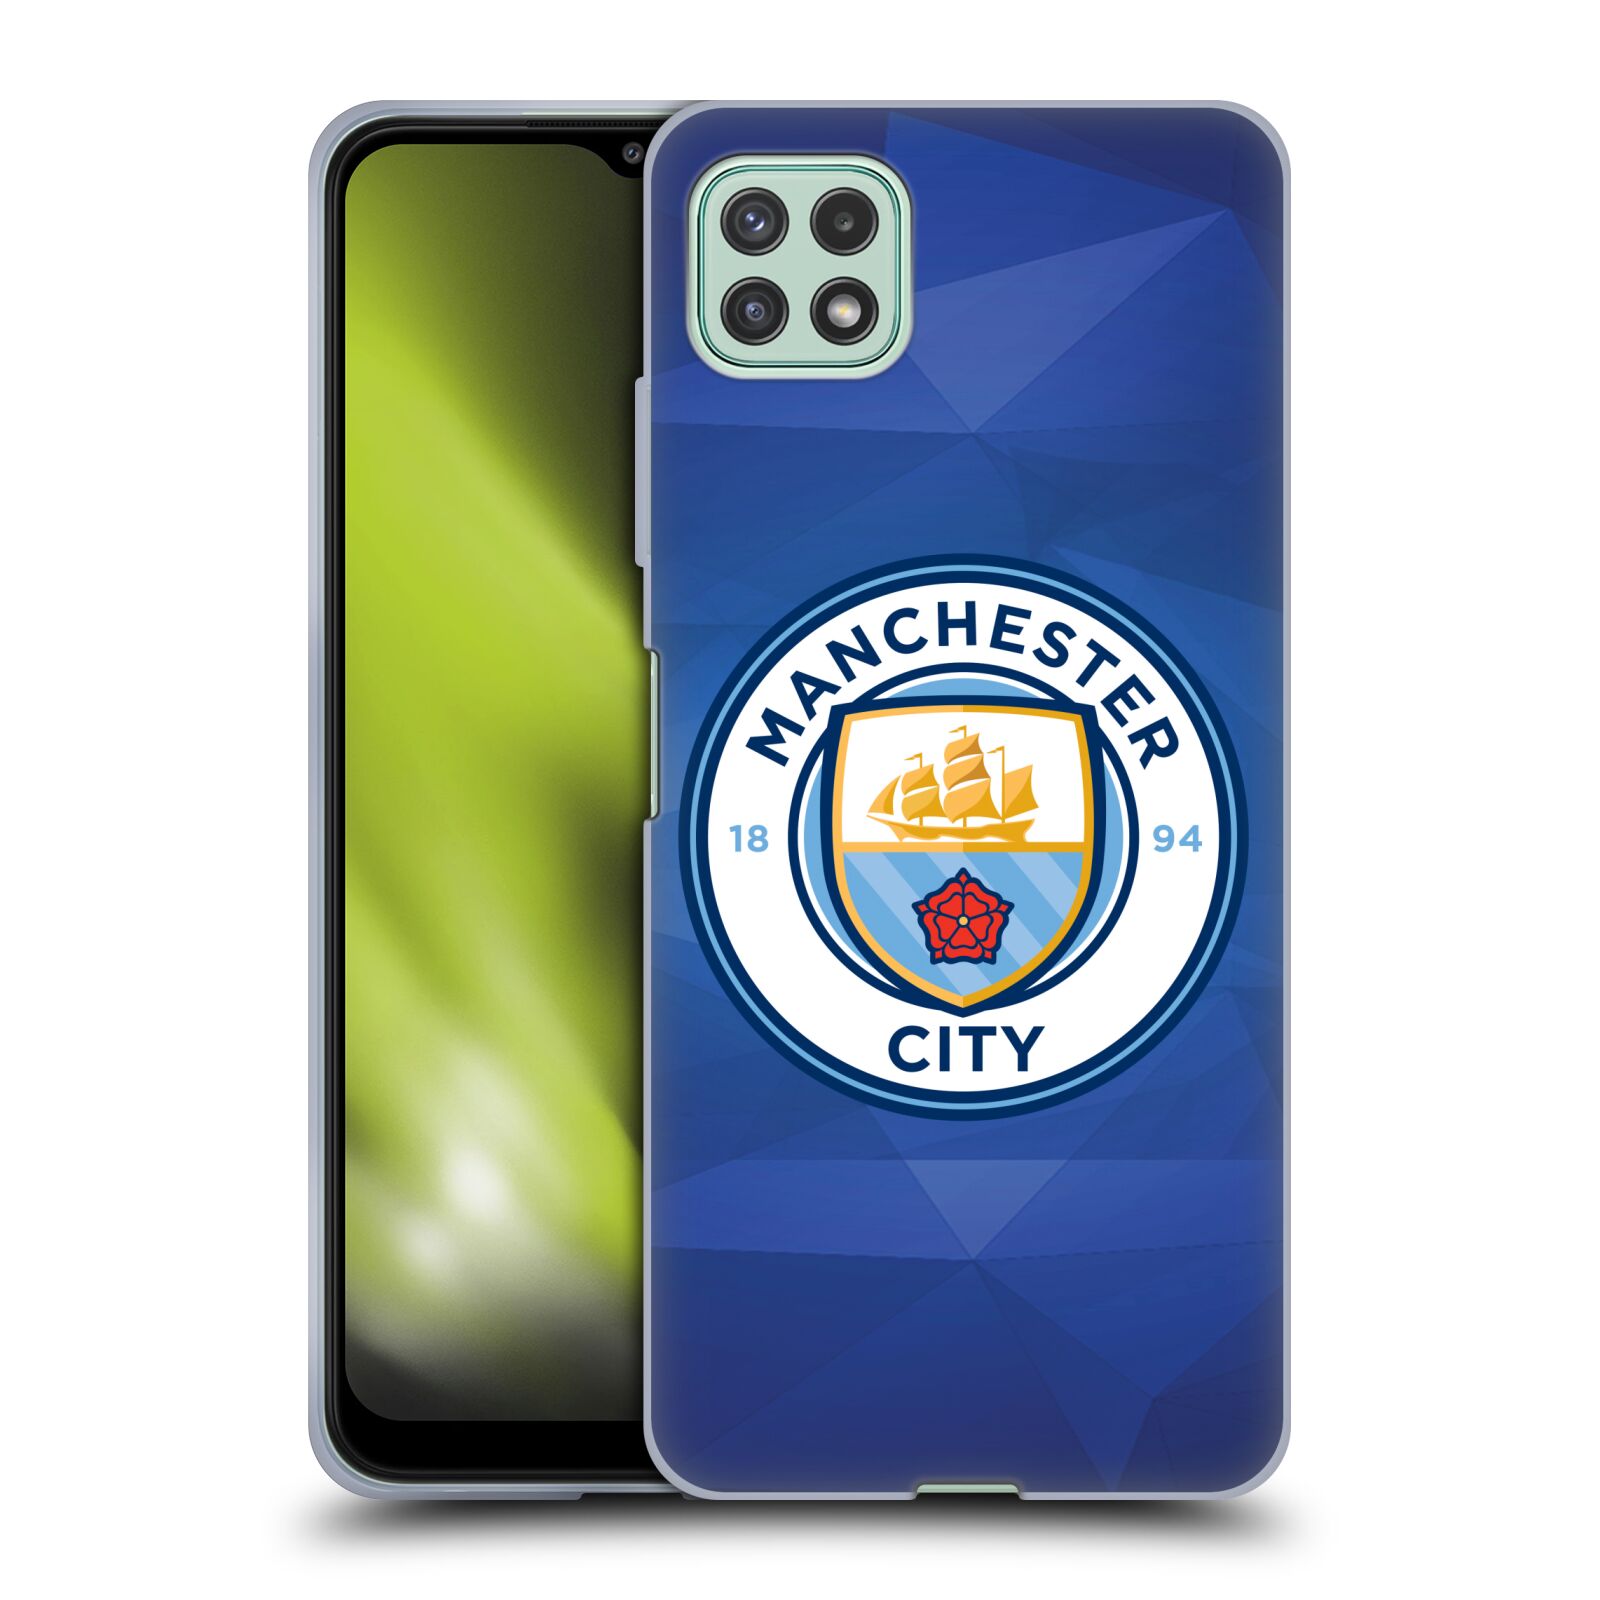 Silikonové pouzdro na mobil Samsung Galaxy A22 5G - Head Case - Manchester City FC - Modré nové logo